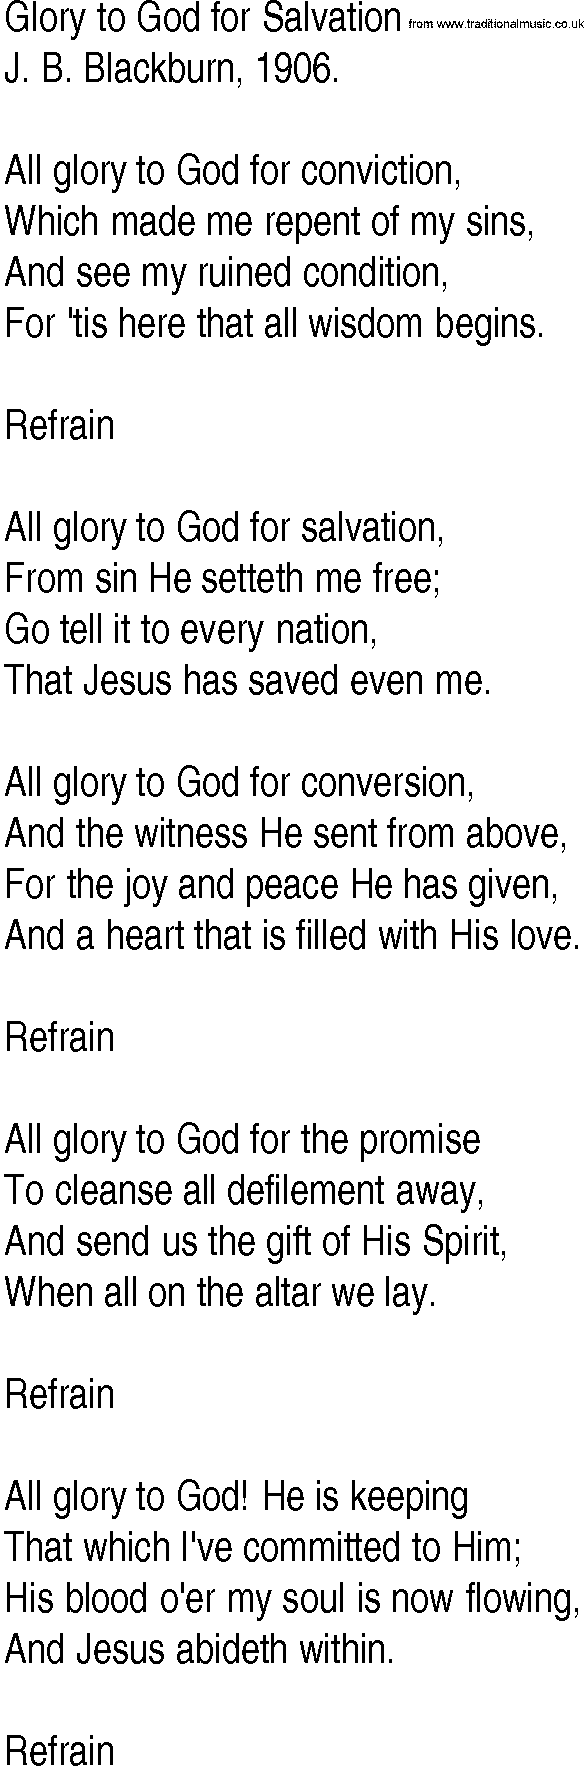 Hymn and Gospel Song: Glory to God for Salvation by J B Blackburn lyrics